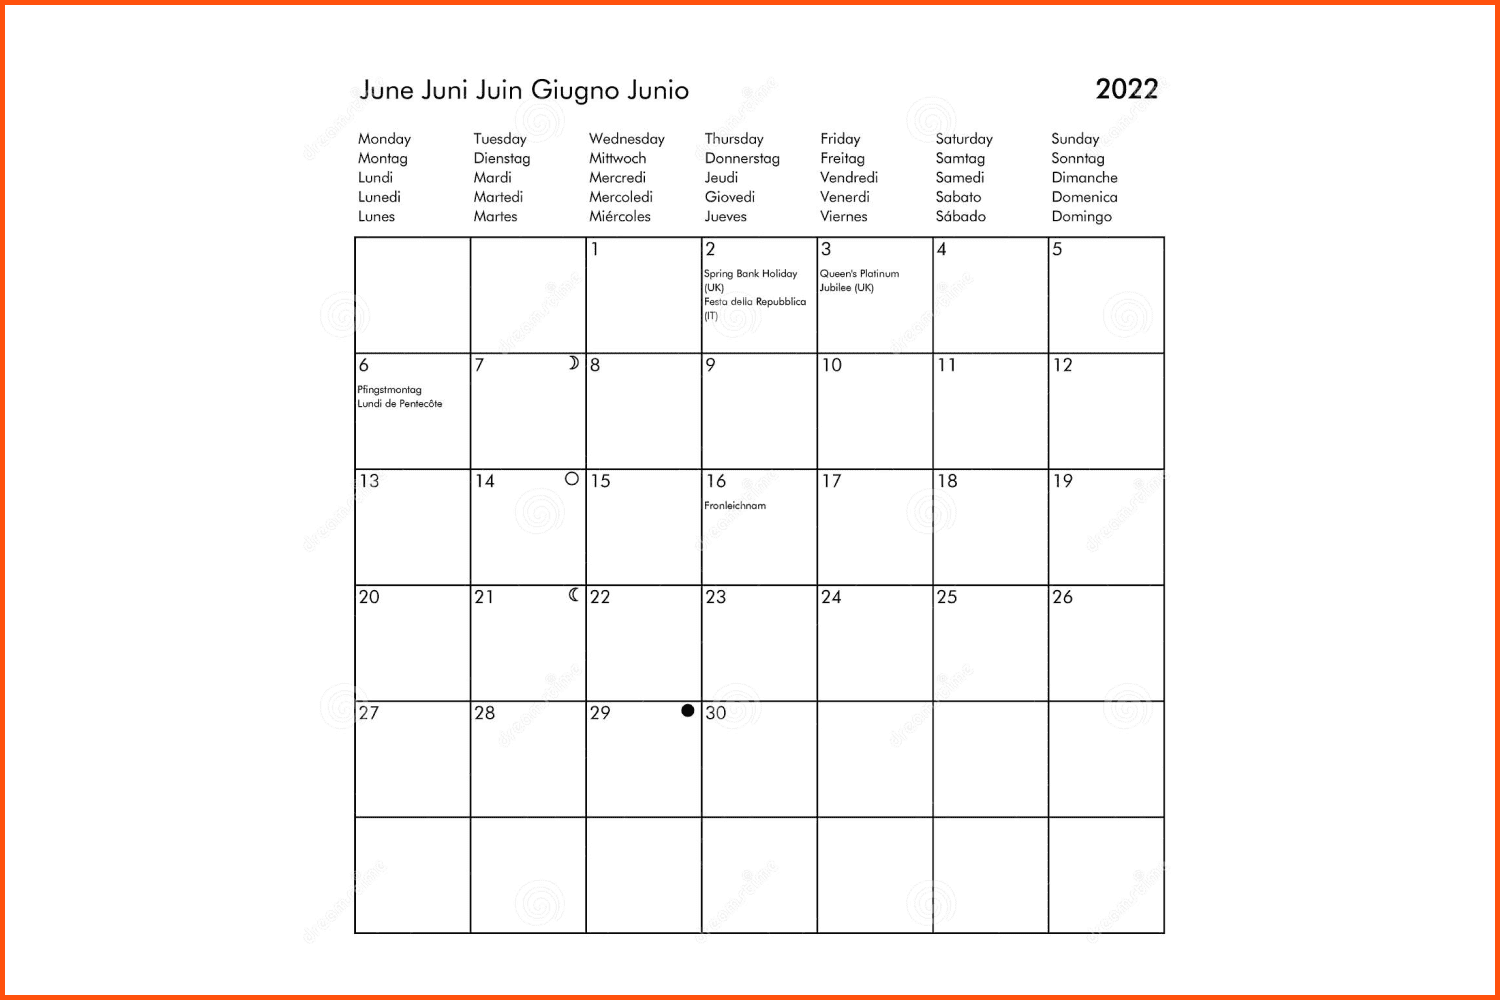 Year 2022 June international calendar with holidays.